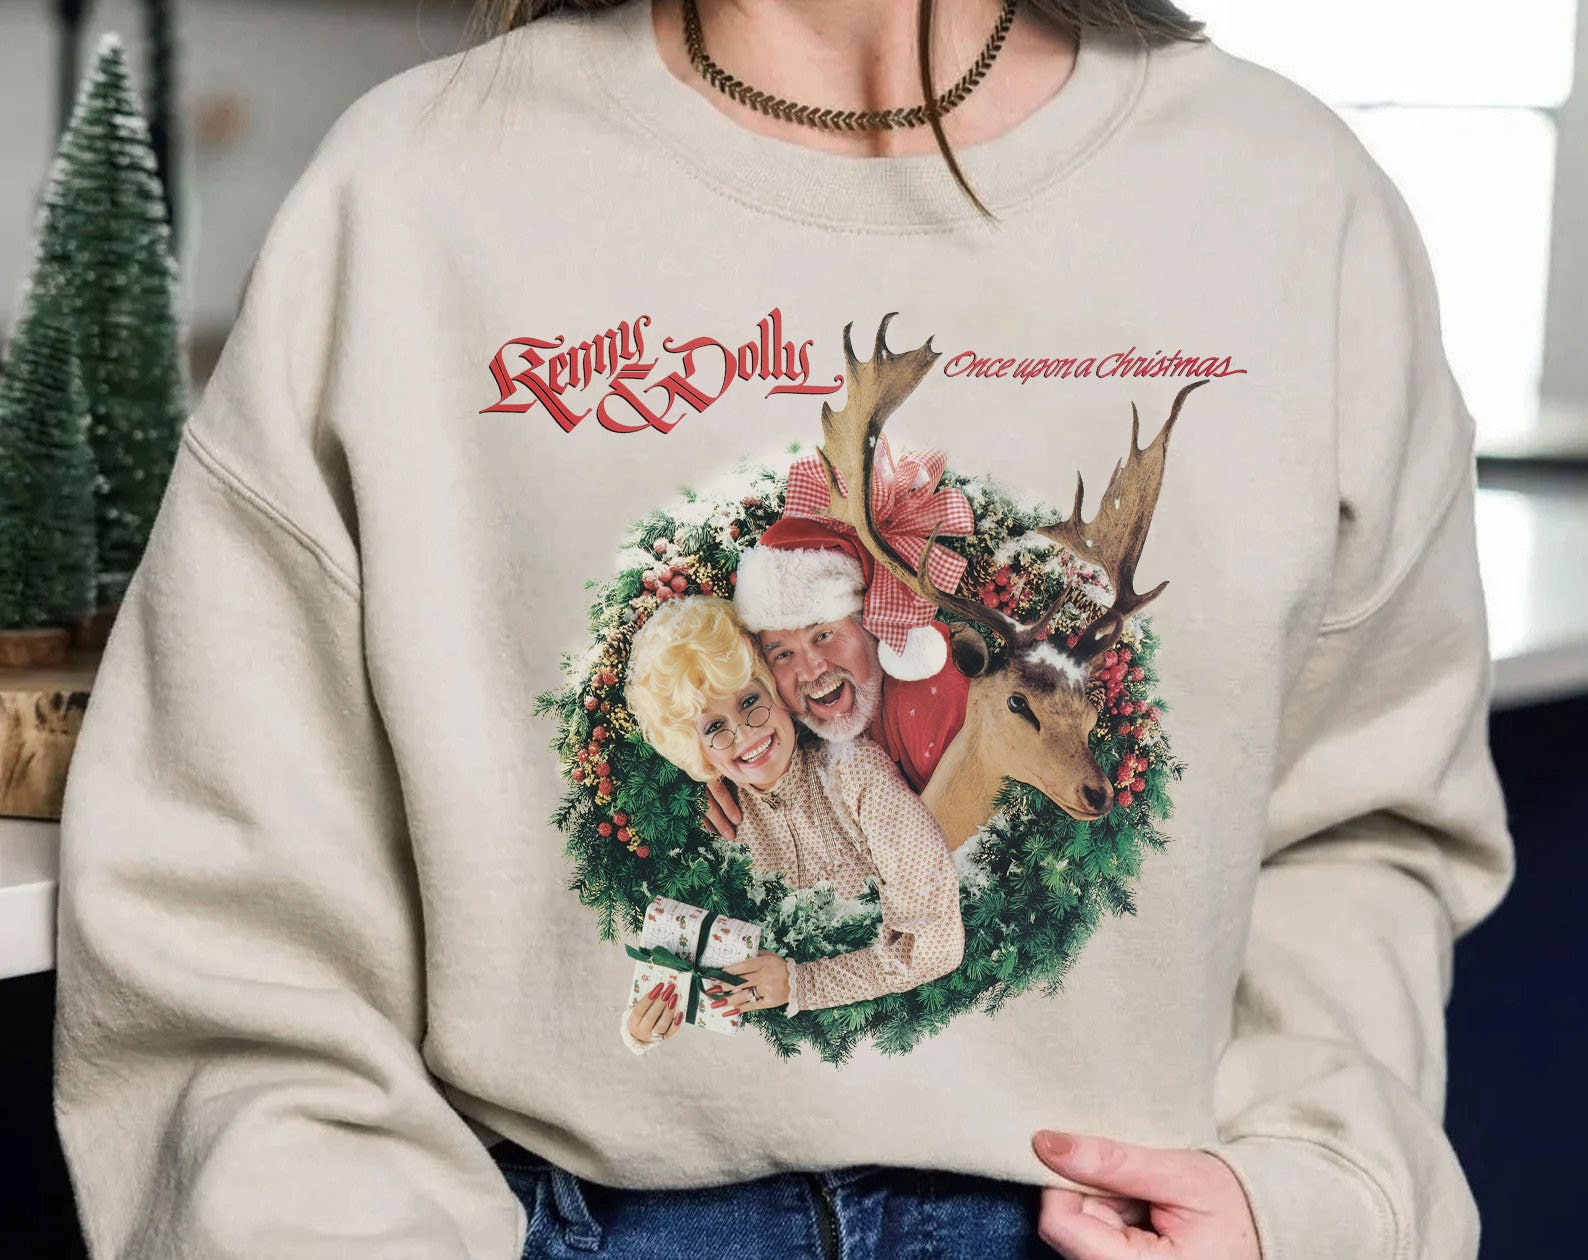 Discover Kenny & Dolly Christmas Sweatshirt, Holly Dolly Christmas Sweatshirt Cowboy Have A Holly Dolly Xmas